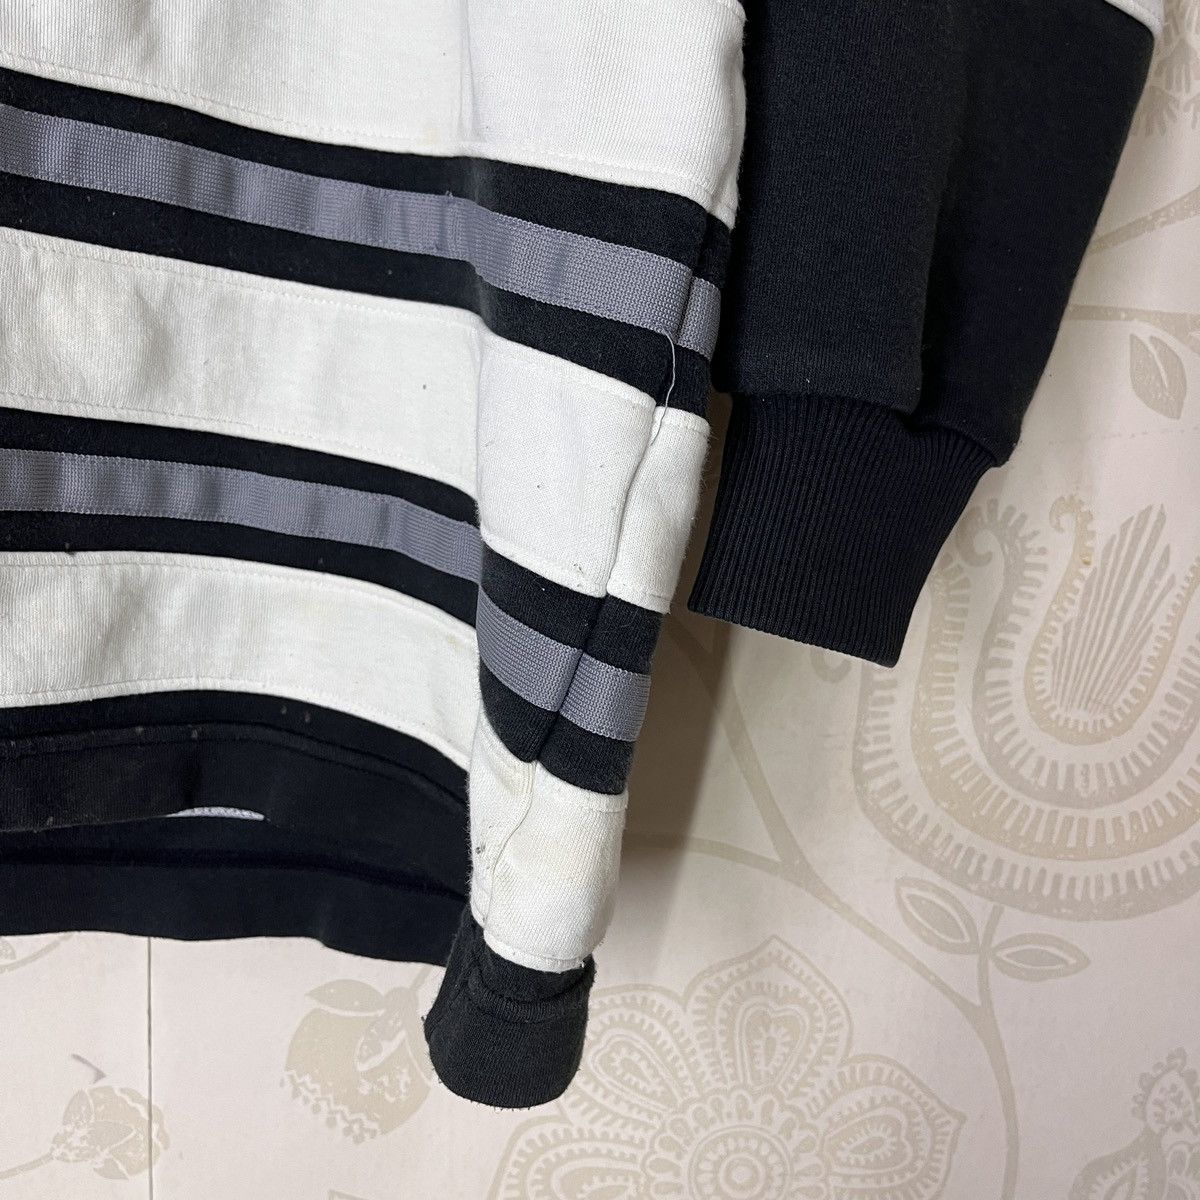 Super Rare Vintage Adidas 3 Stripes Descente Made In Japan - 12